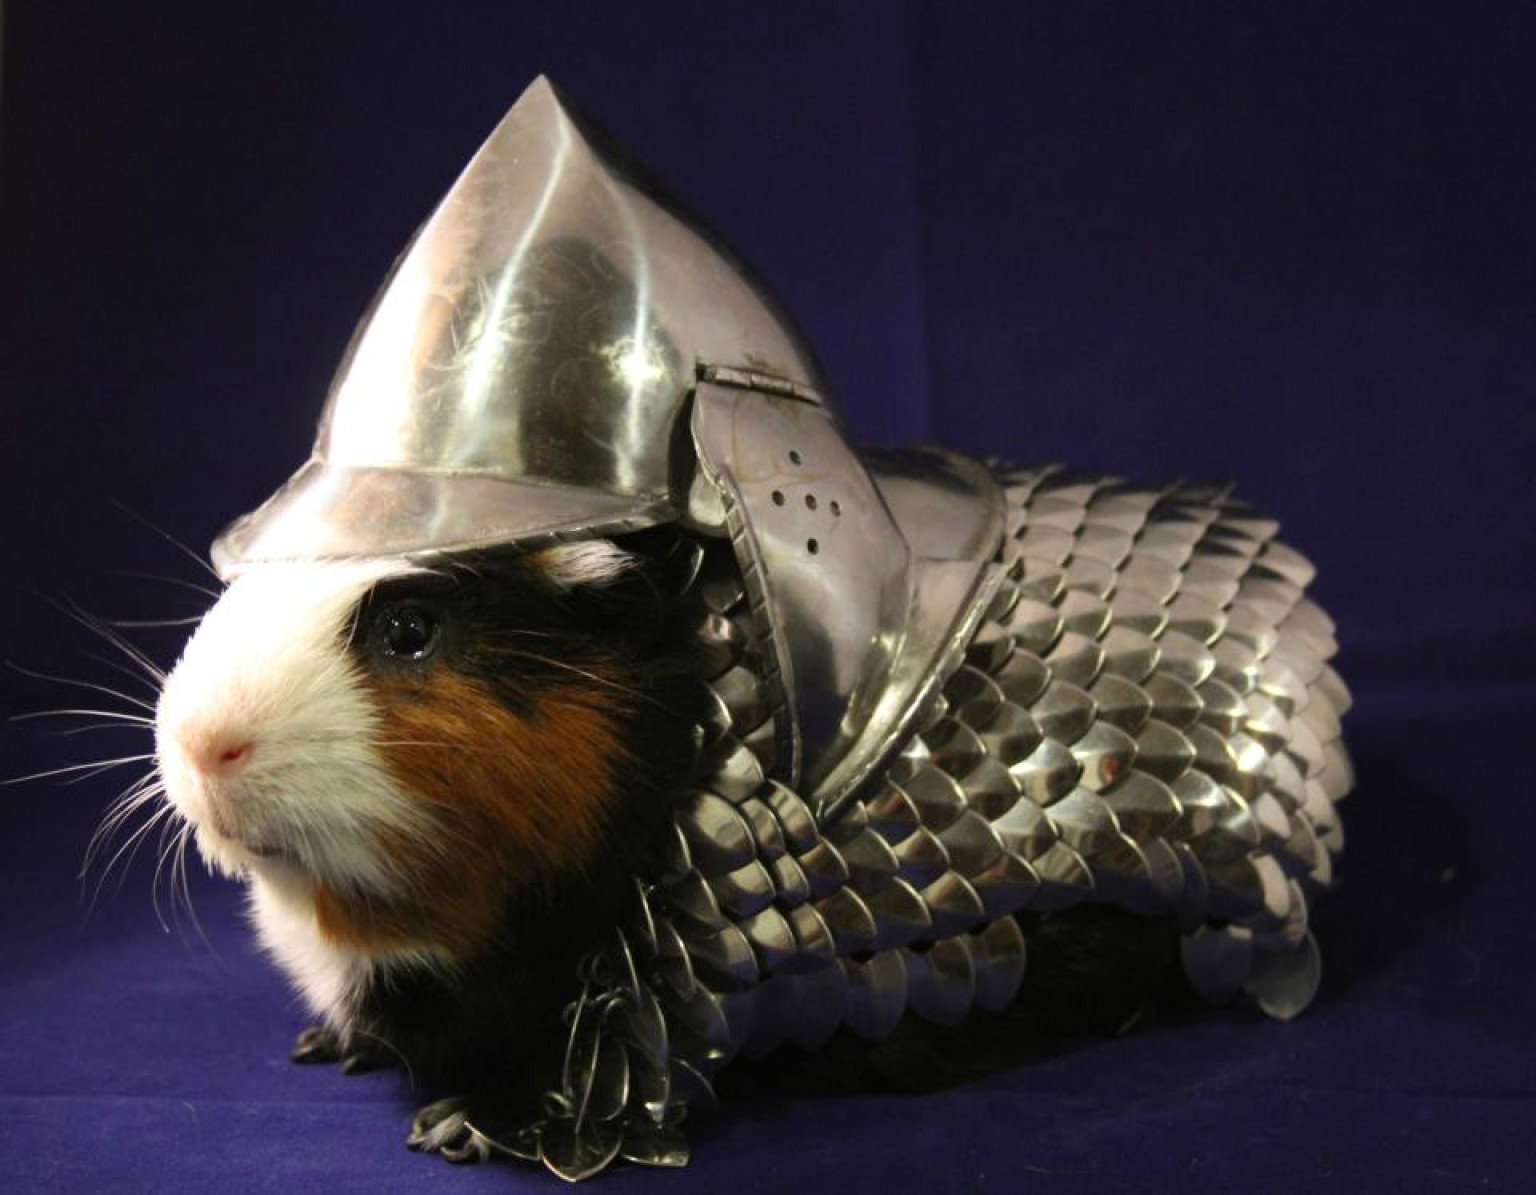 Guinea Pig Armor Sold: Winning eBay Bid Is $24,300 (PHOTOS) | HuffPost